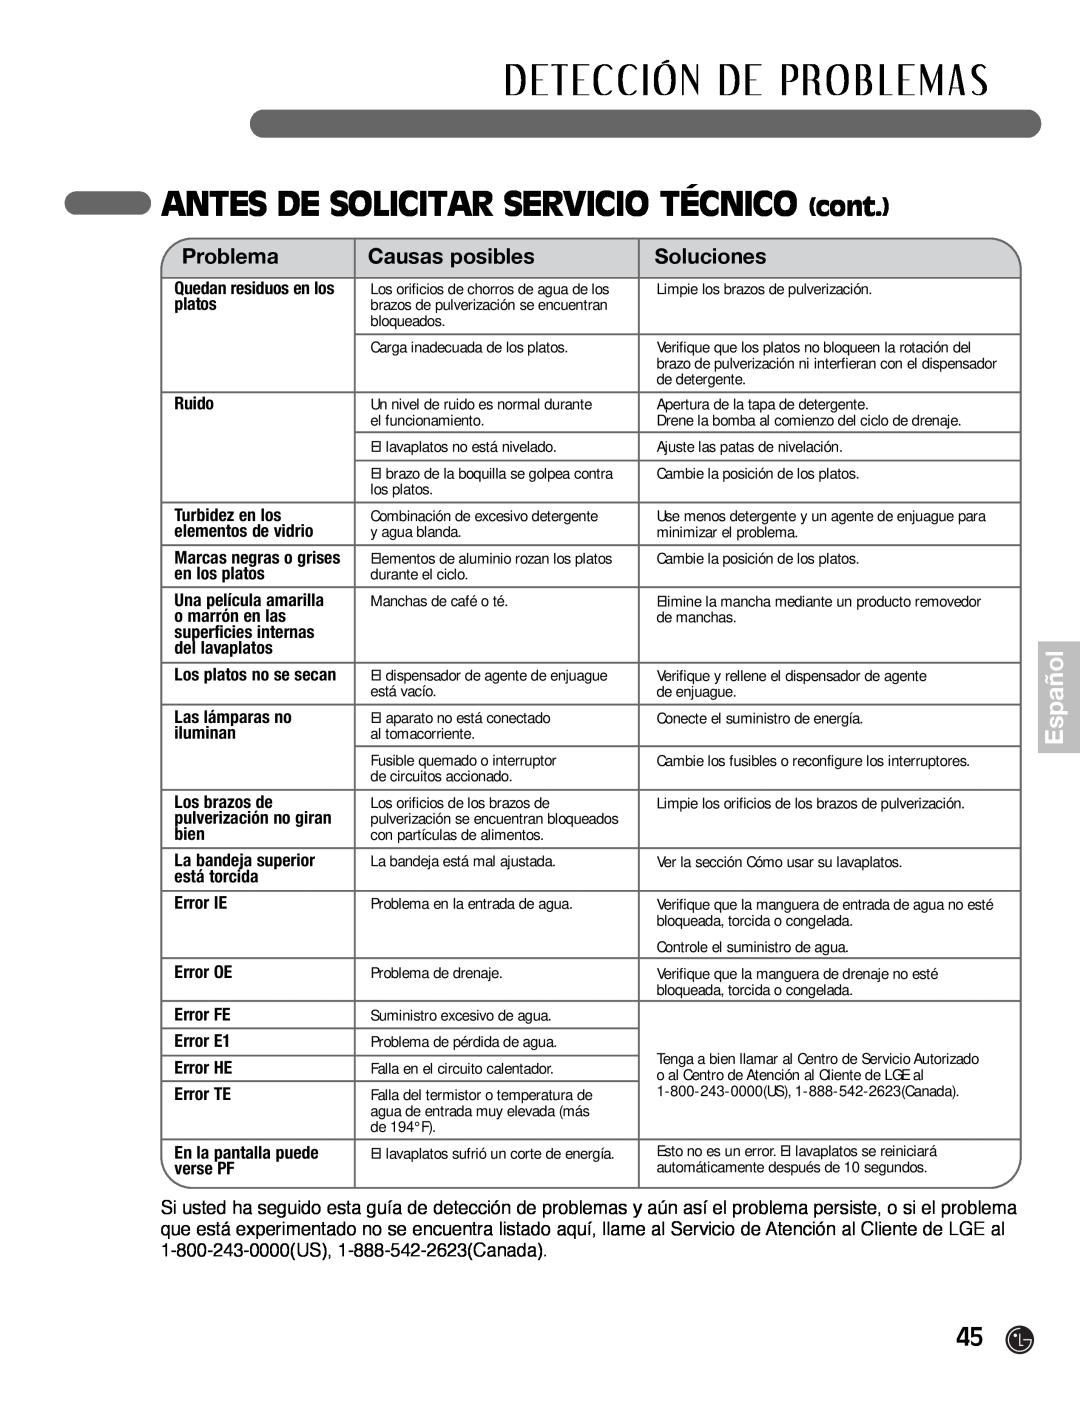 LG Electronics LDF7932WW ANTES DE SOLICITAR SERVICIO TÉCNICO cont, Detección De Pro B L E M A S, Español, Problema, platos 